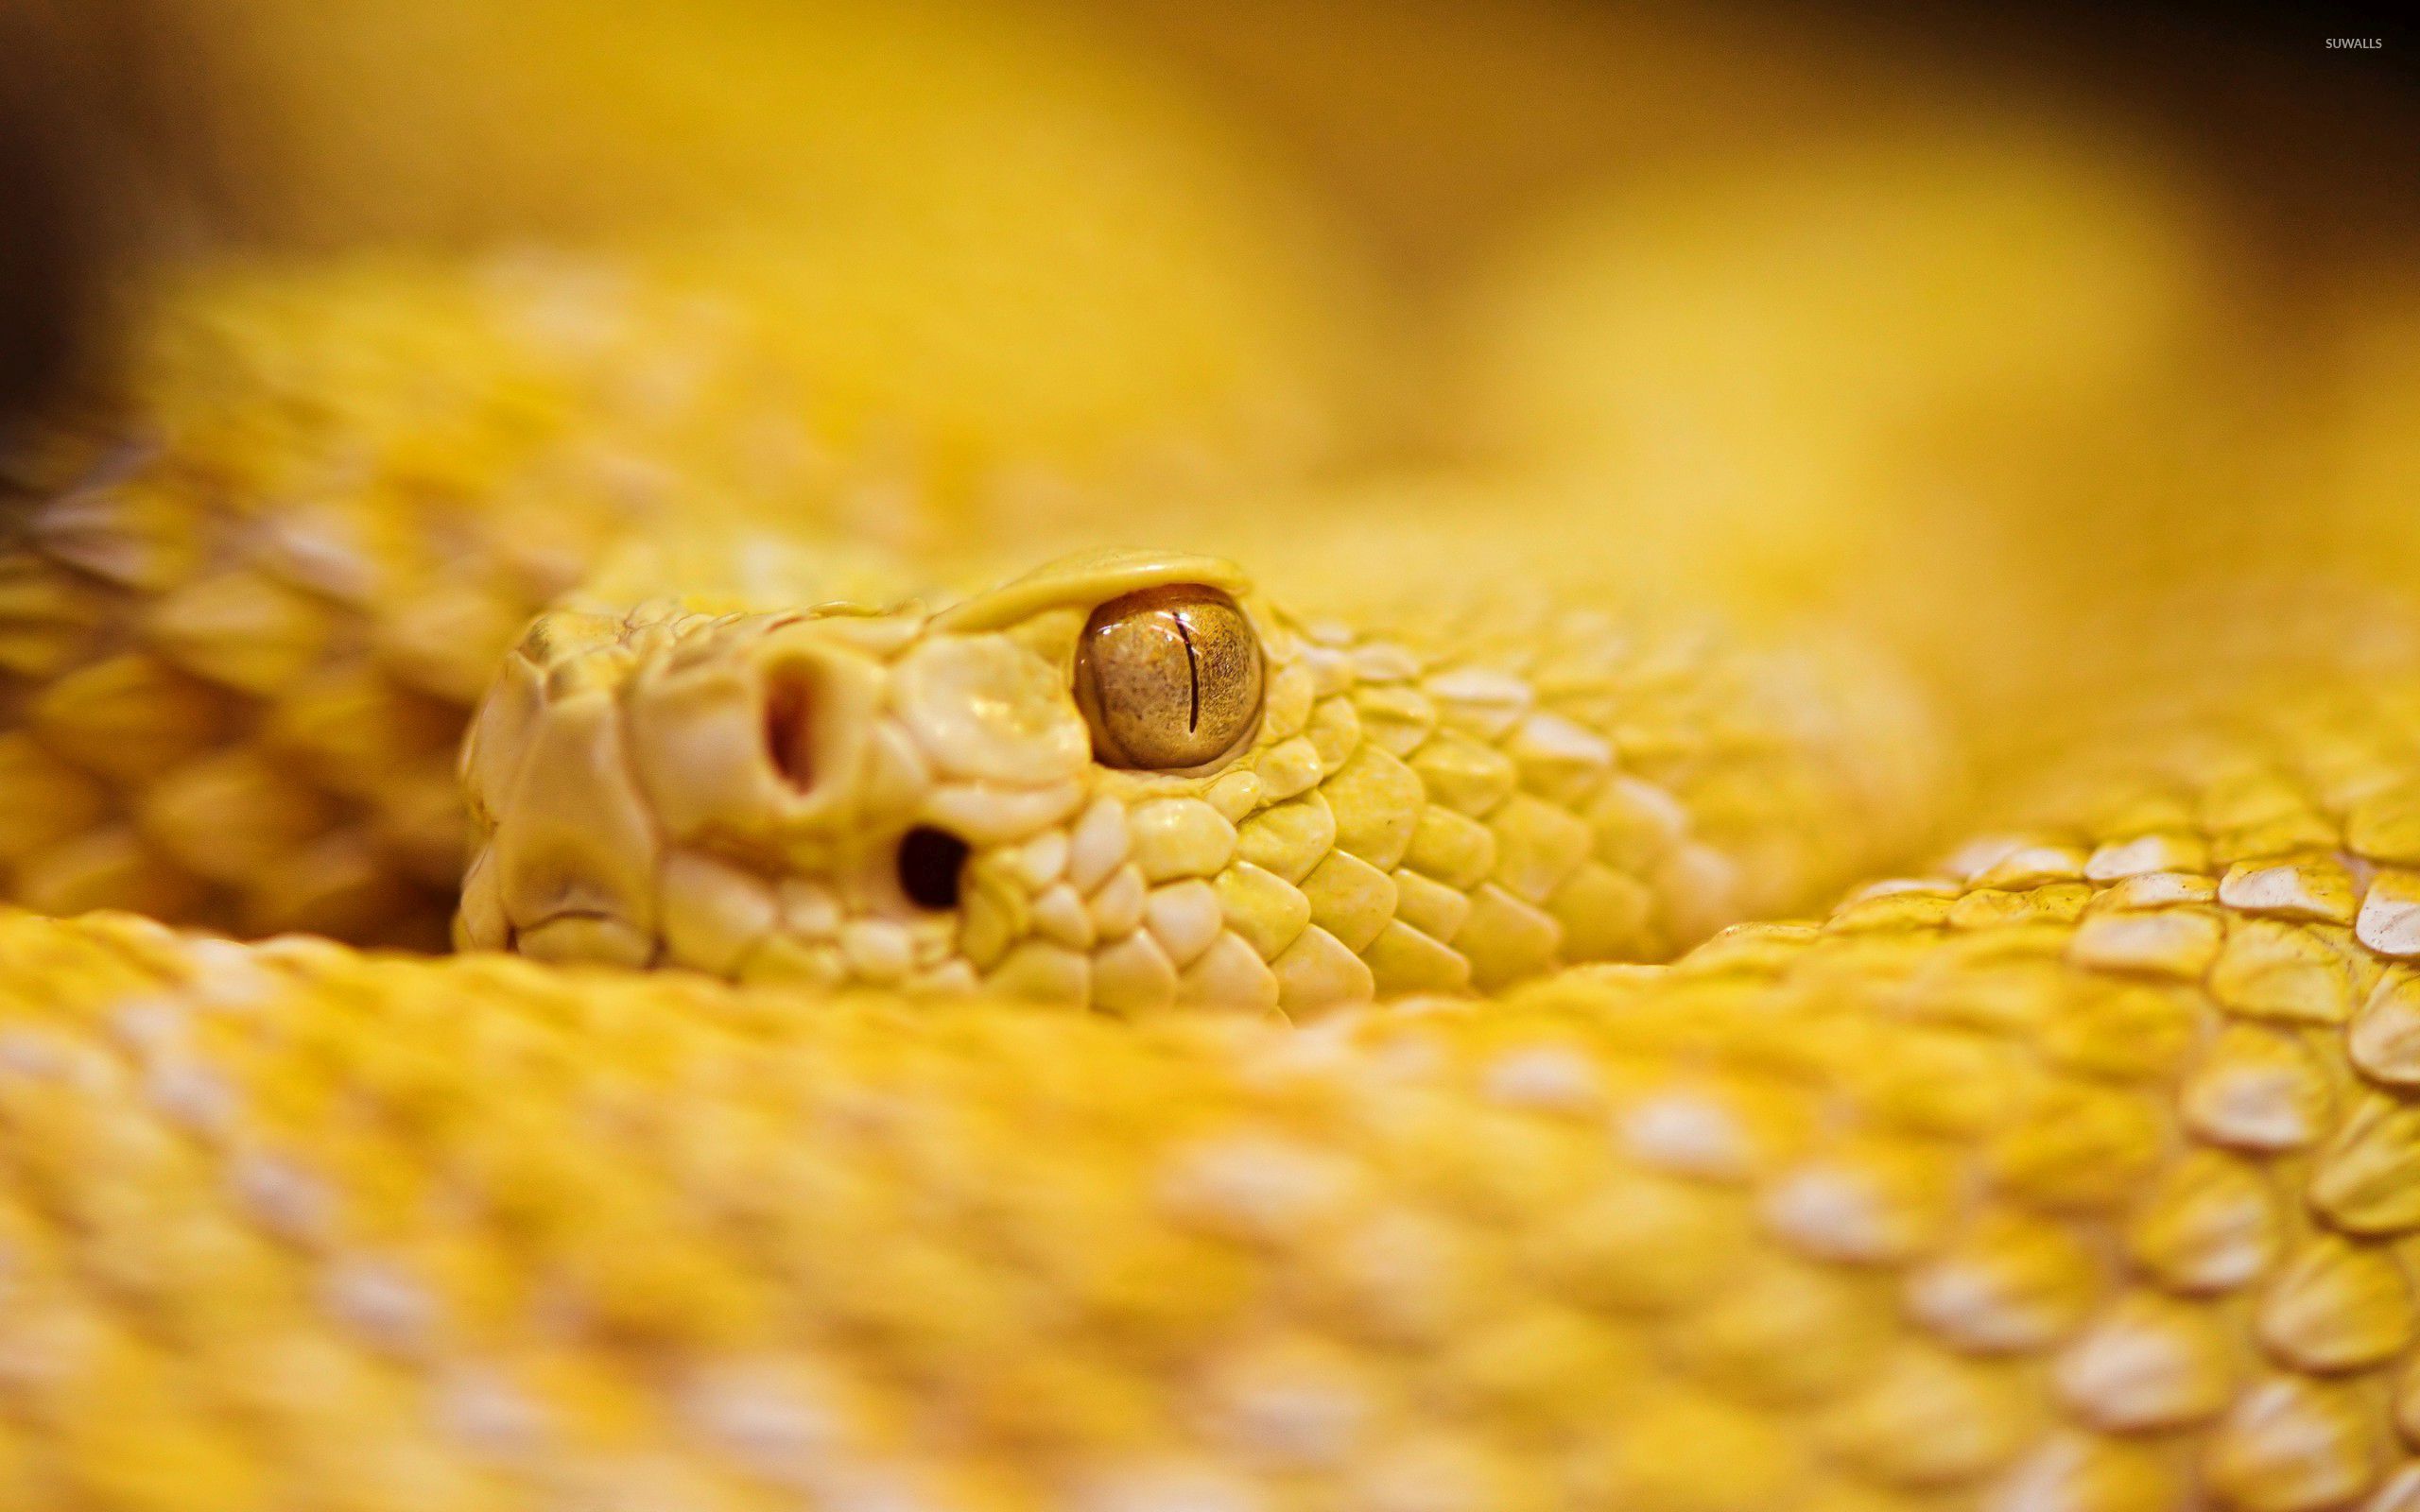 Wallpaper snake rattlesnake ratchet images for desktop section животные   download